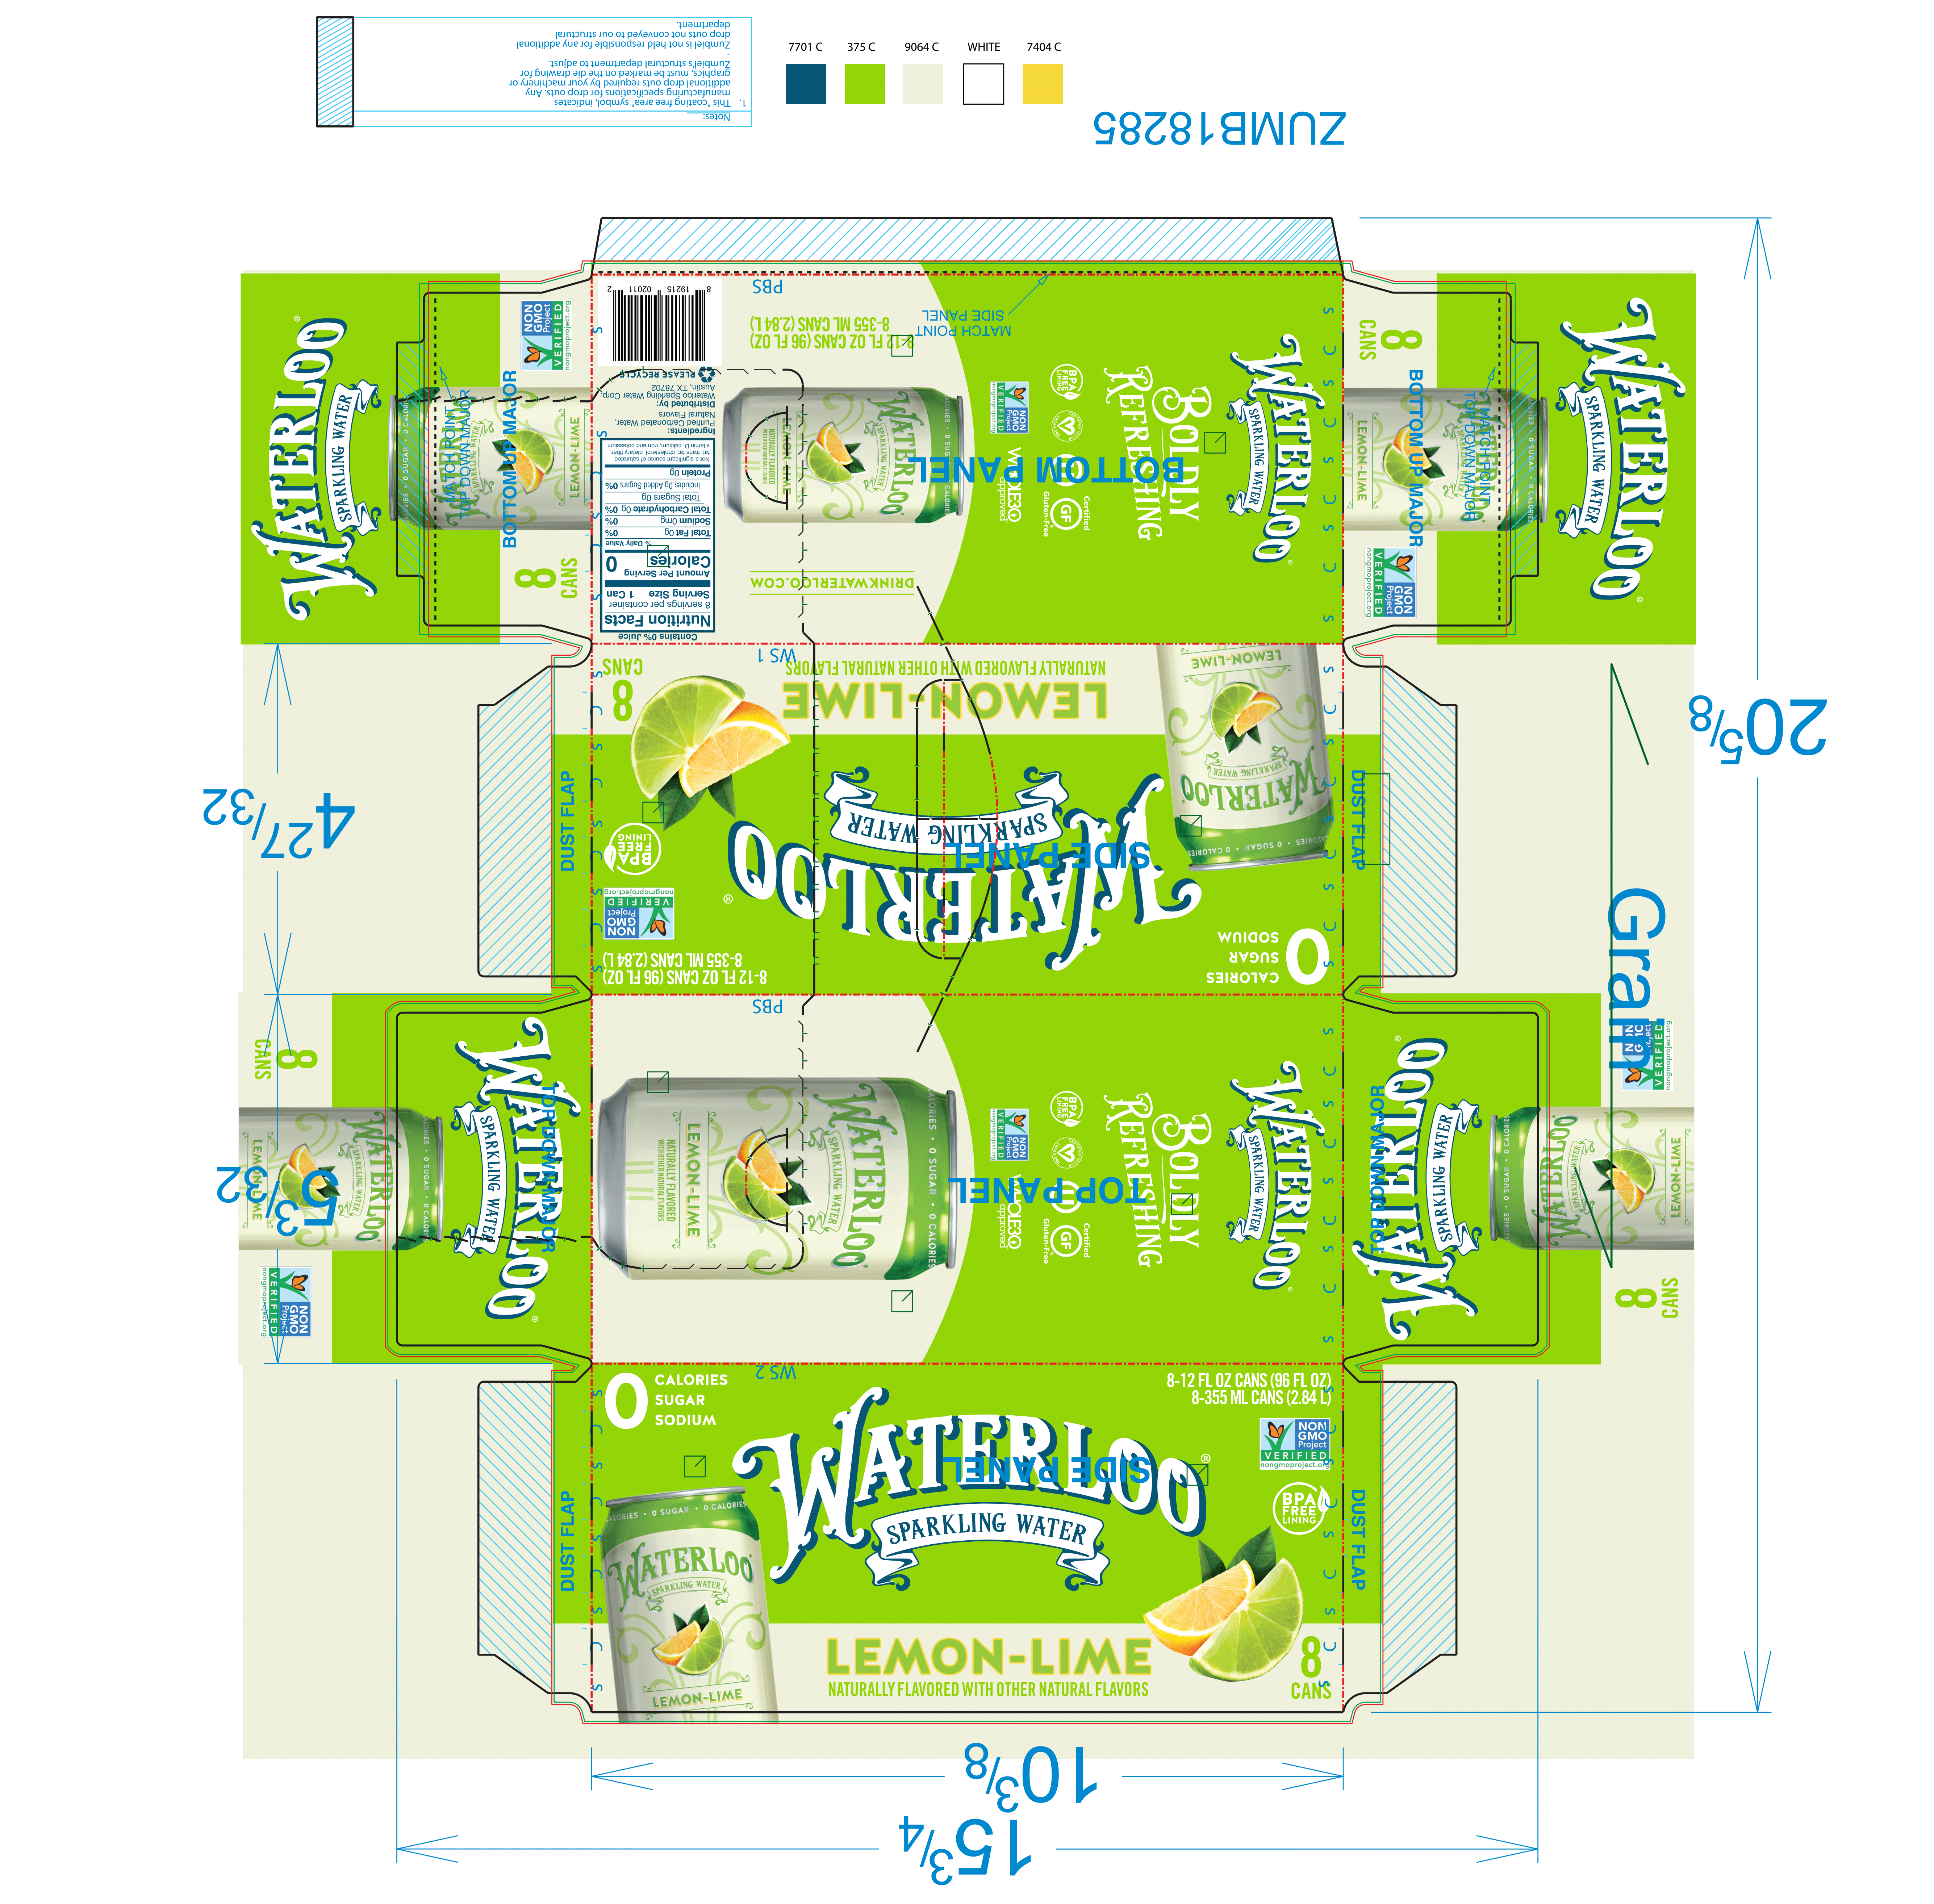 Waterloo Lemon-Lime Sparkling Water 3 innerpacks per case 96.0 fl Product Label